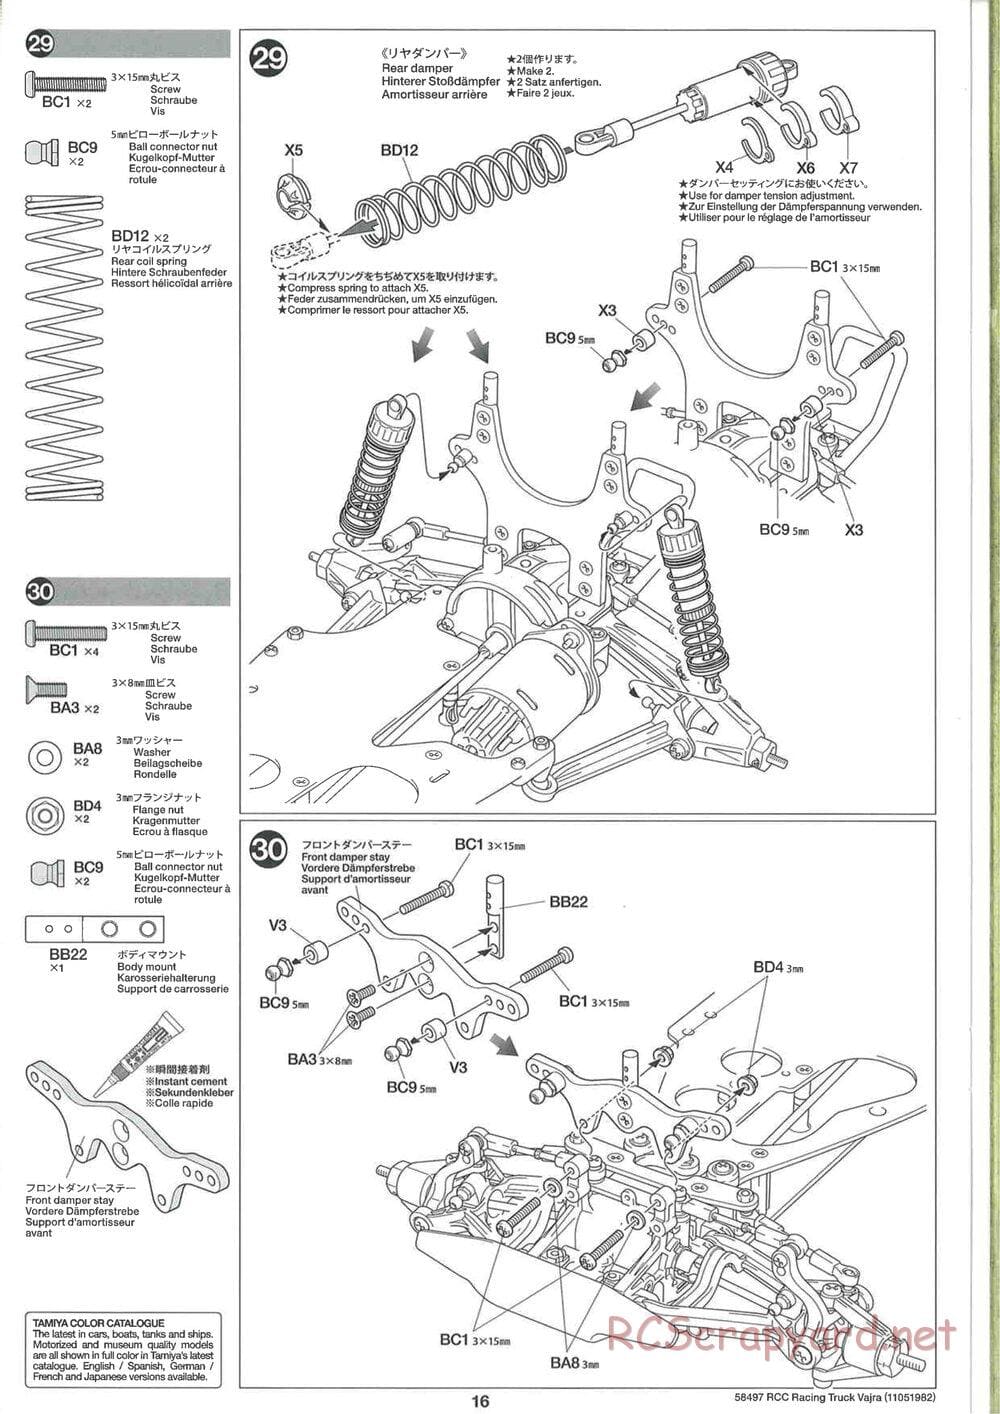 Tamiya - Vajra - AV Chassis - Manual - Page 16